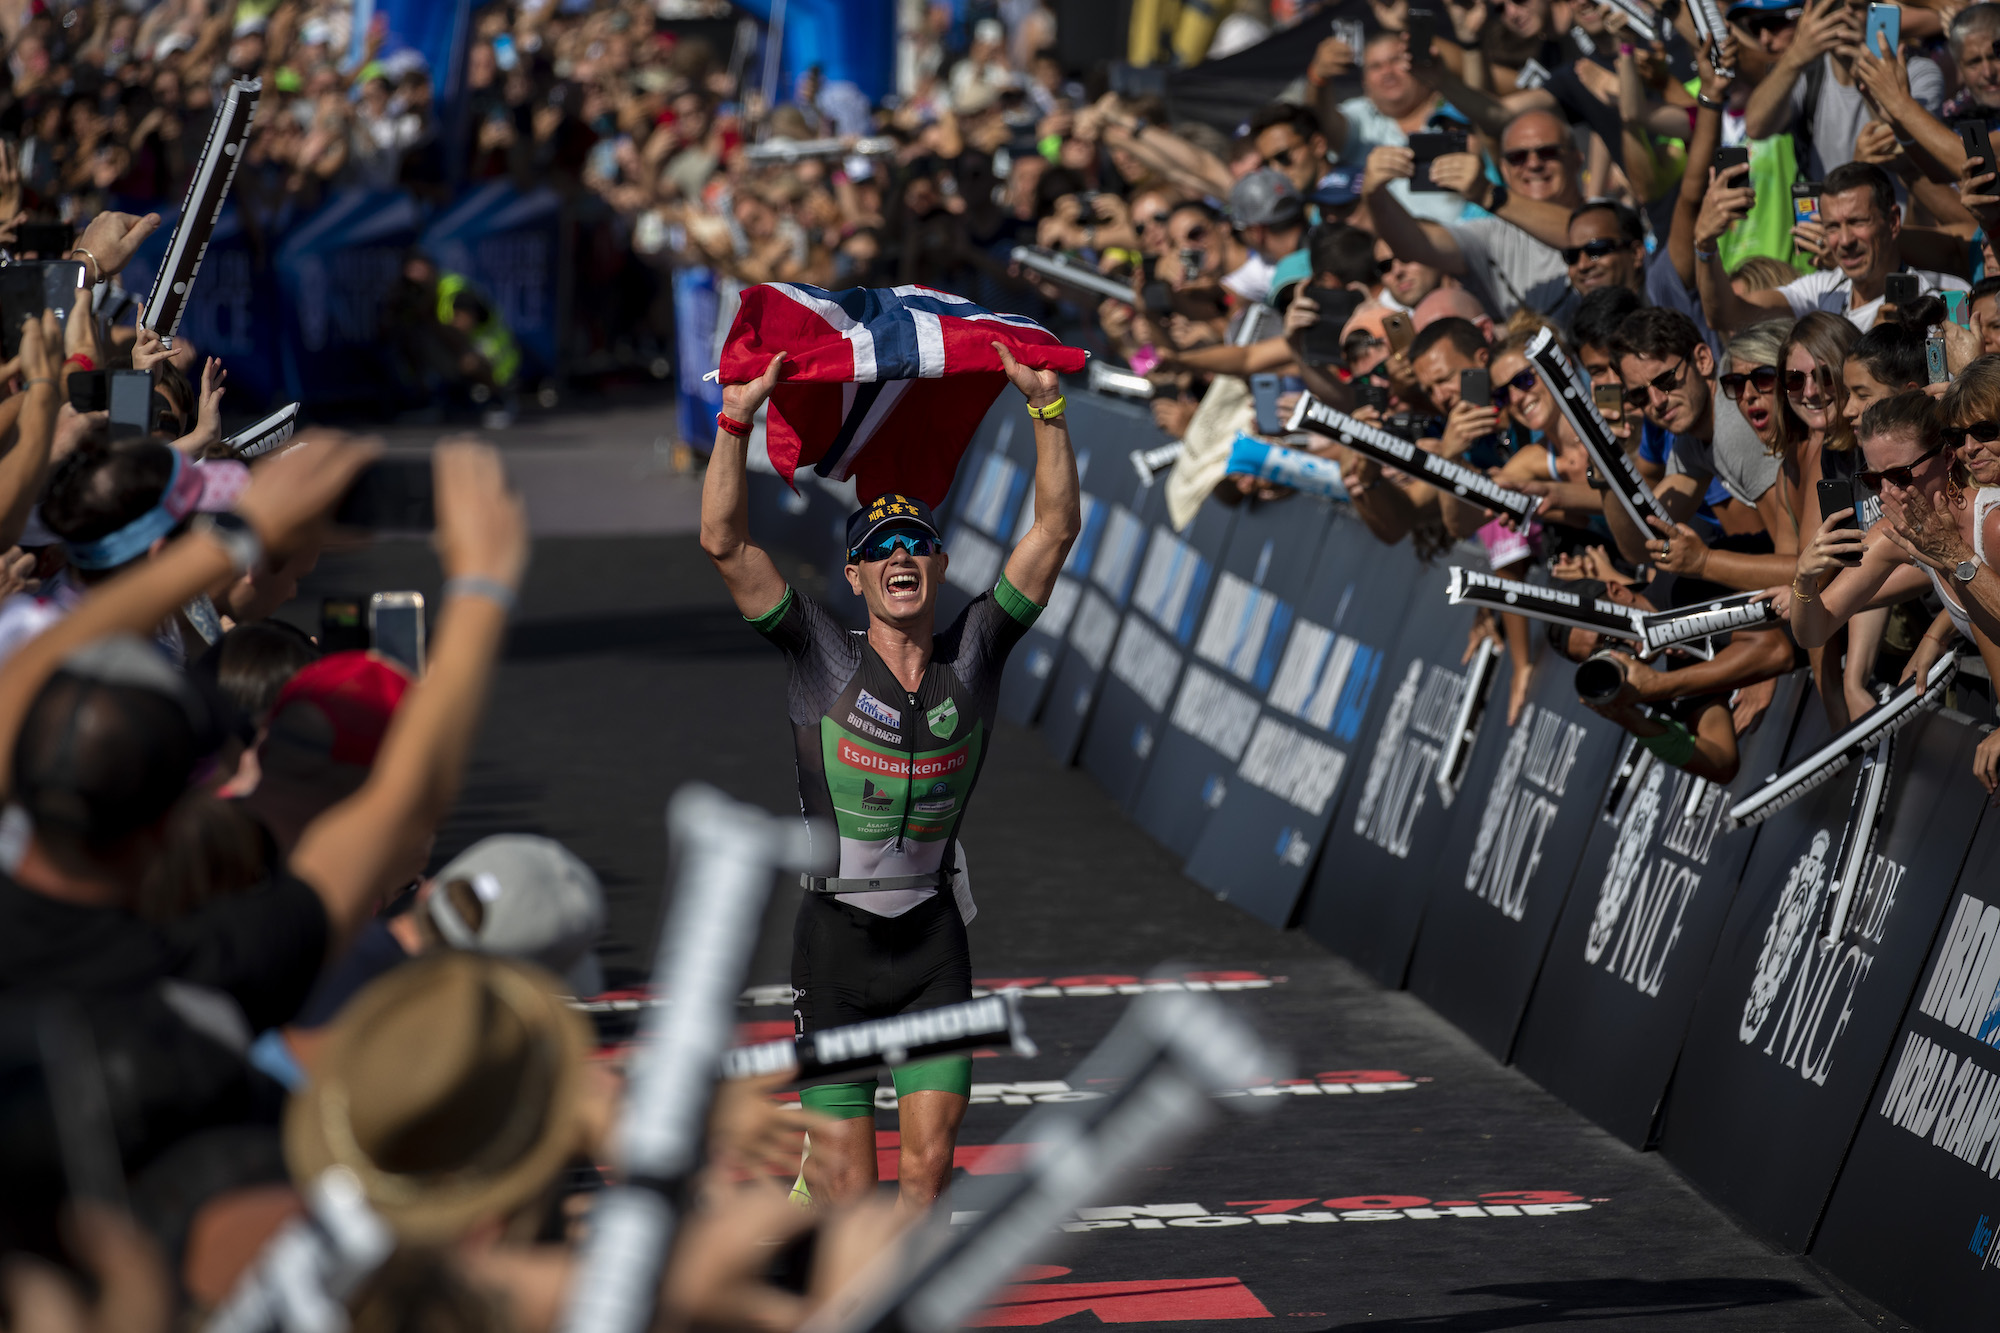 Gustav Iden crosses the finish line to win Ironman 70.3 World Championship in 2019